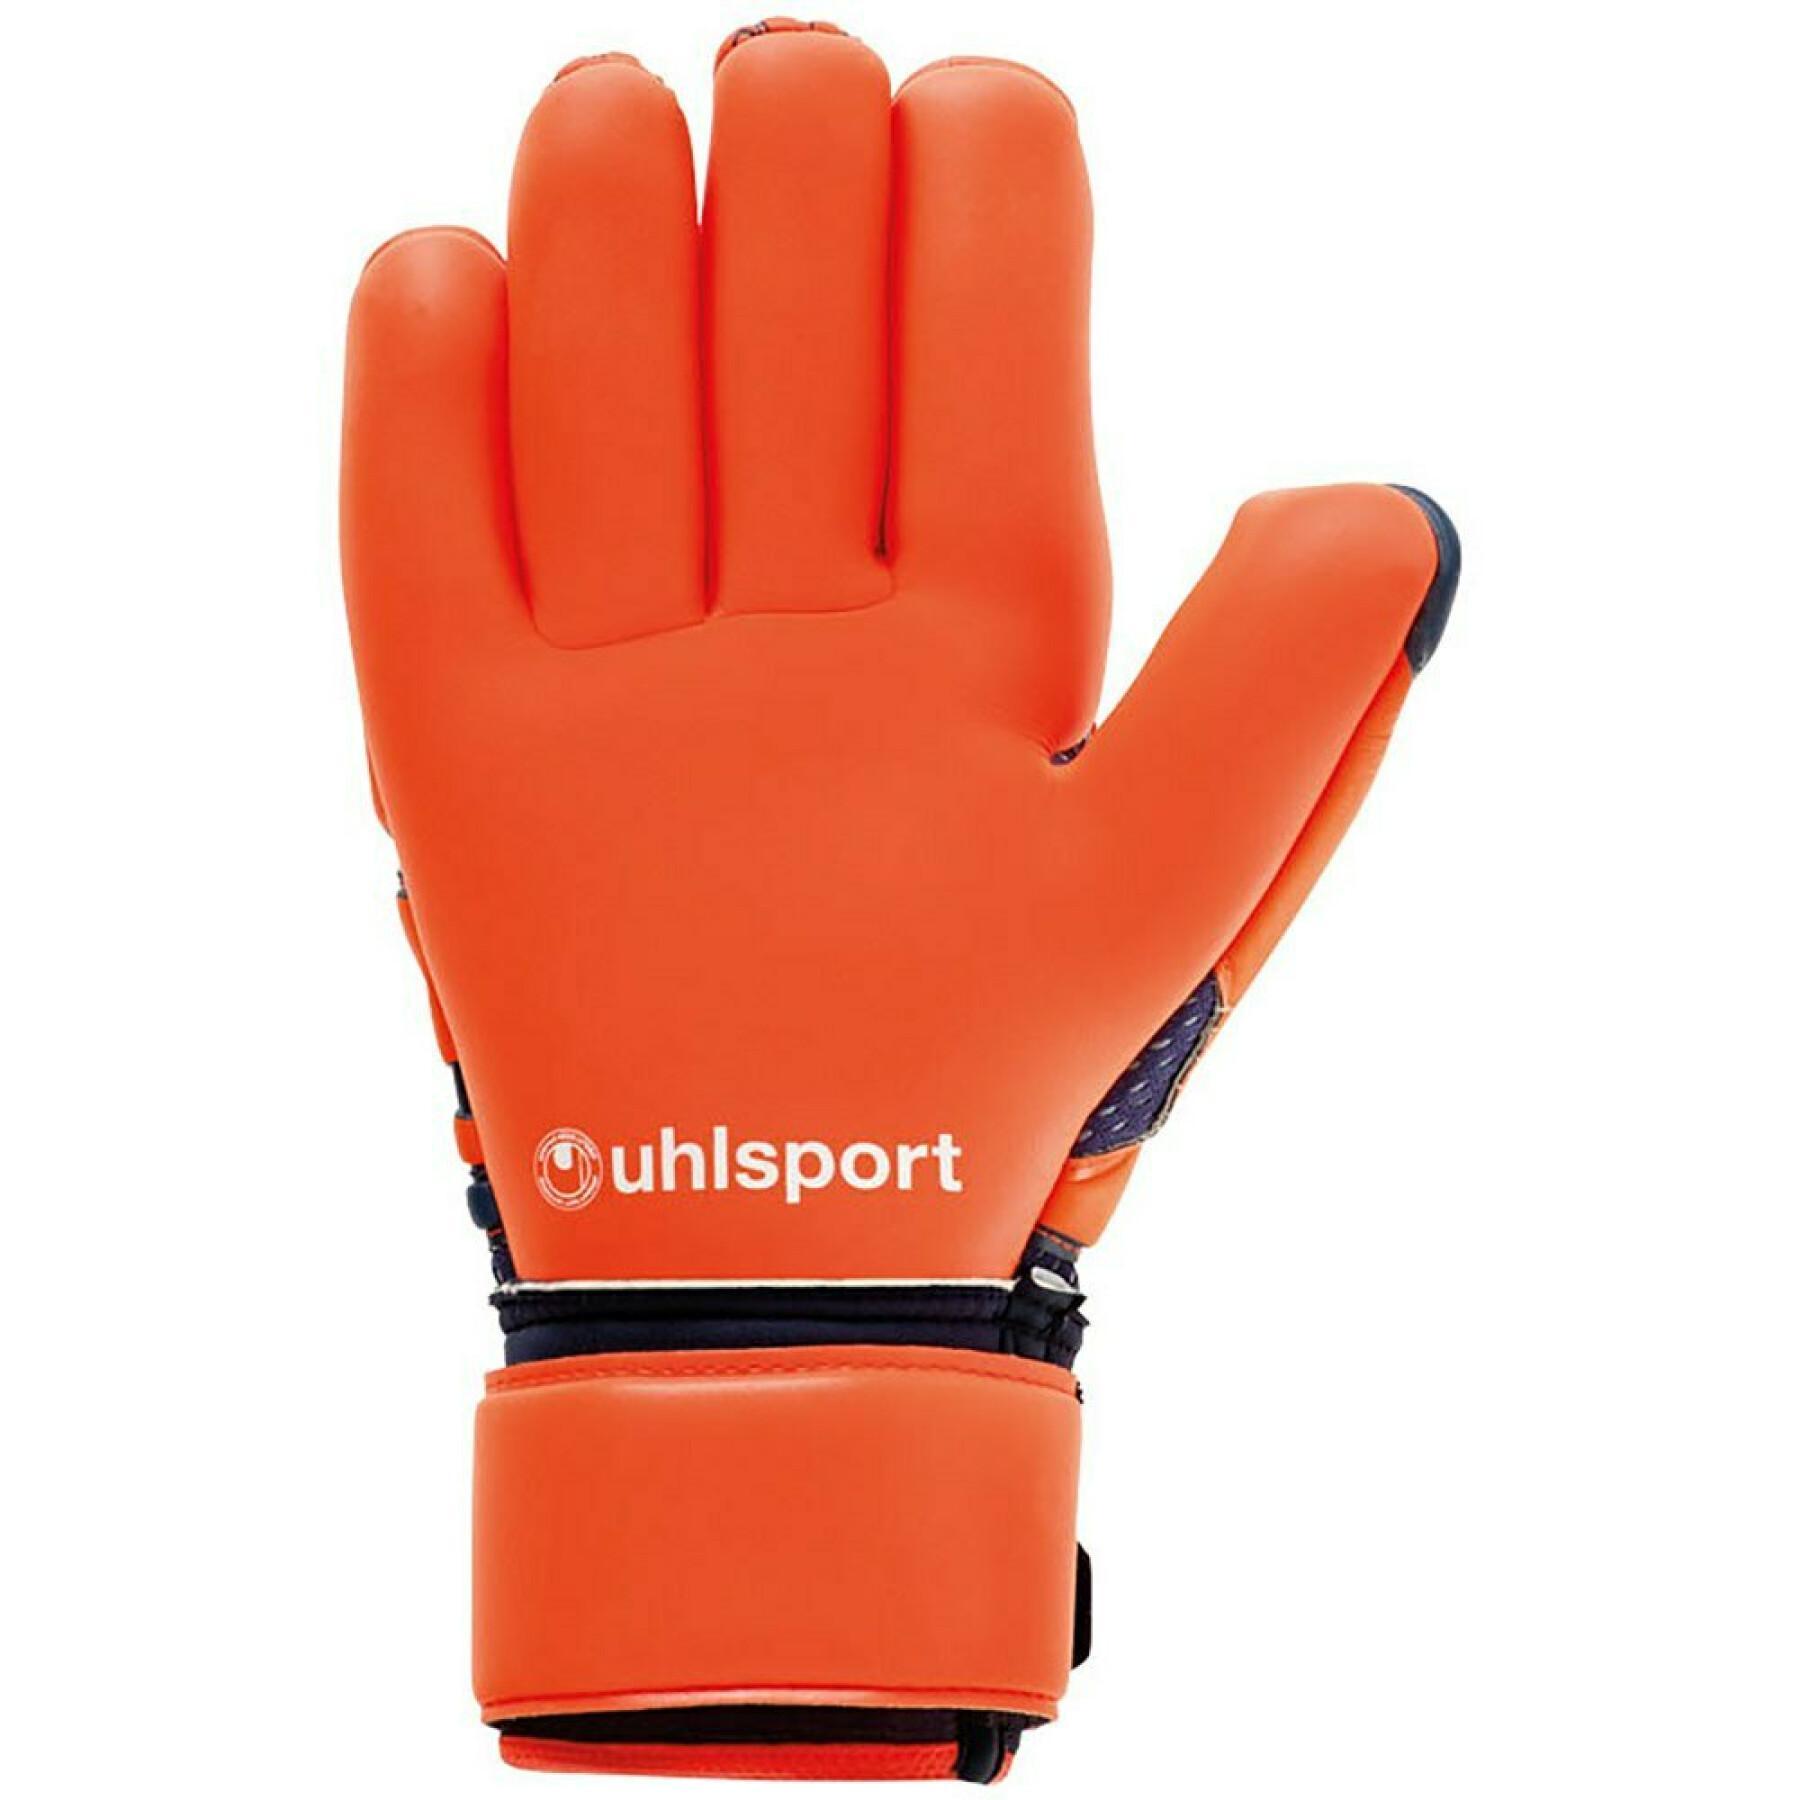 Goalkeeper gloves Uhlsport Next level Absolutgrip fingersurround